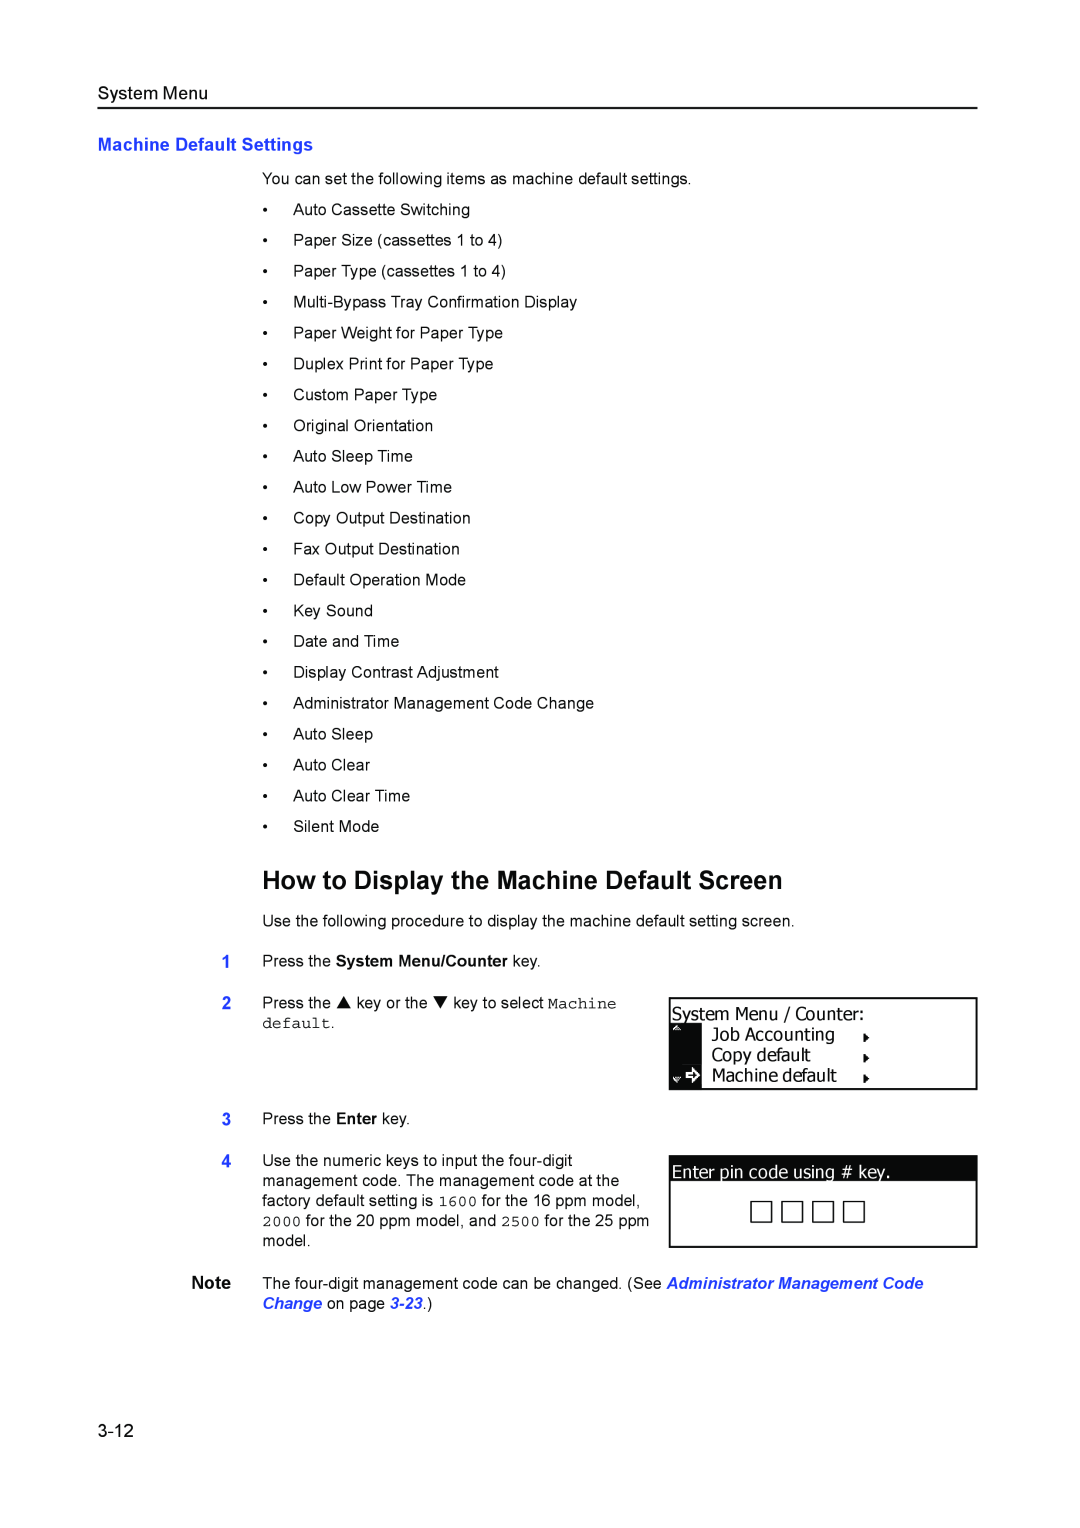 Kyocera 2050, 1650, 2550 manual How to Display the Machine Default Screen, Machine Default Settings, 3-12, System Menu 